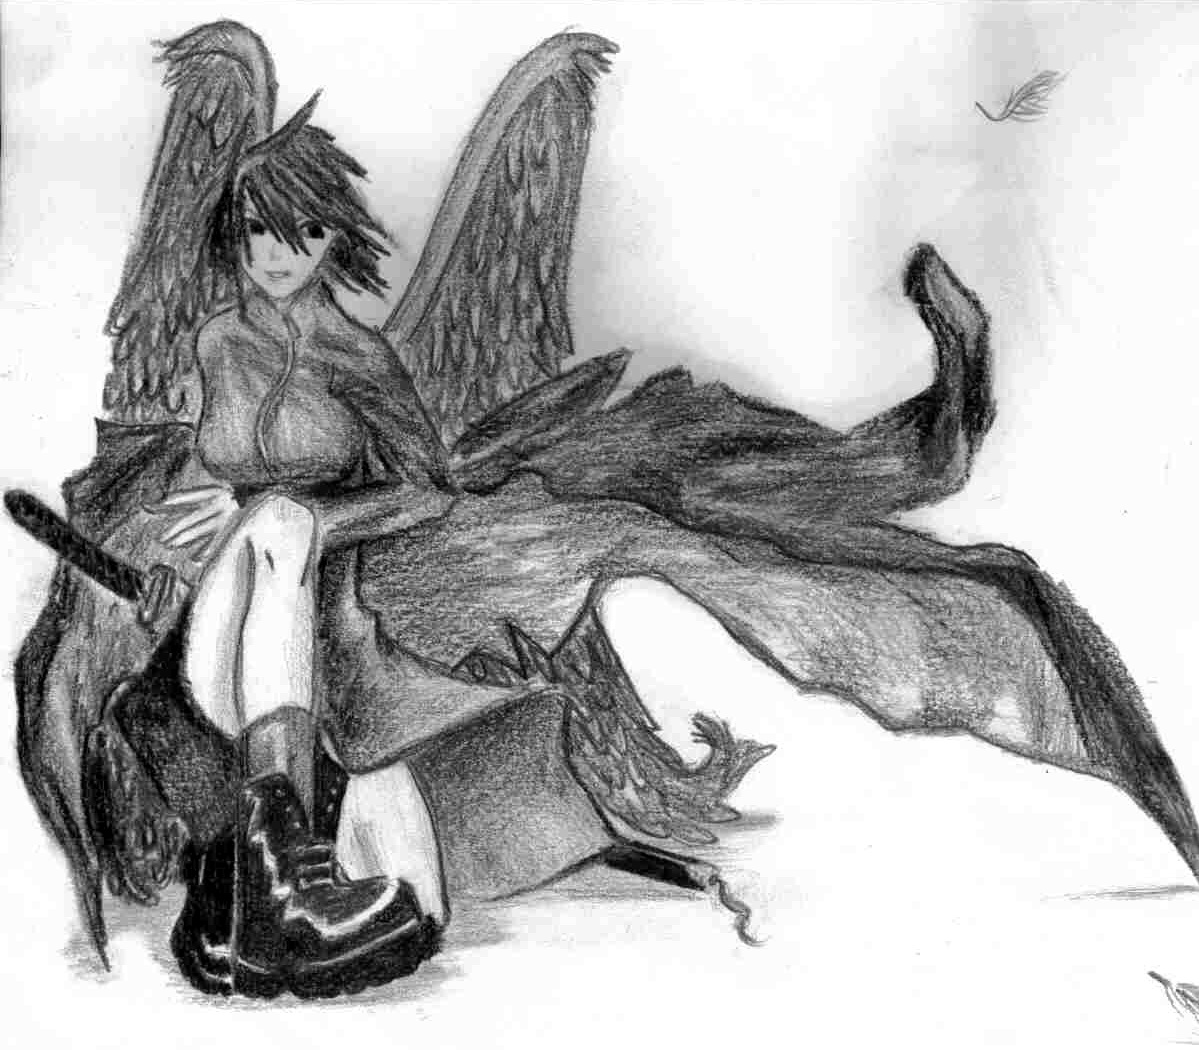 Dark Anime Angel by Heatherenie